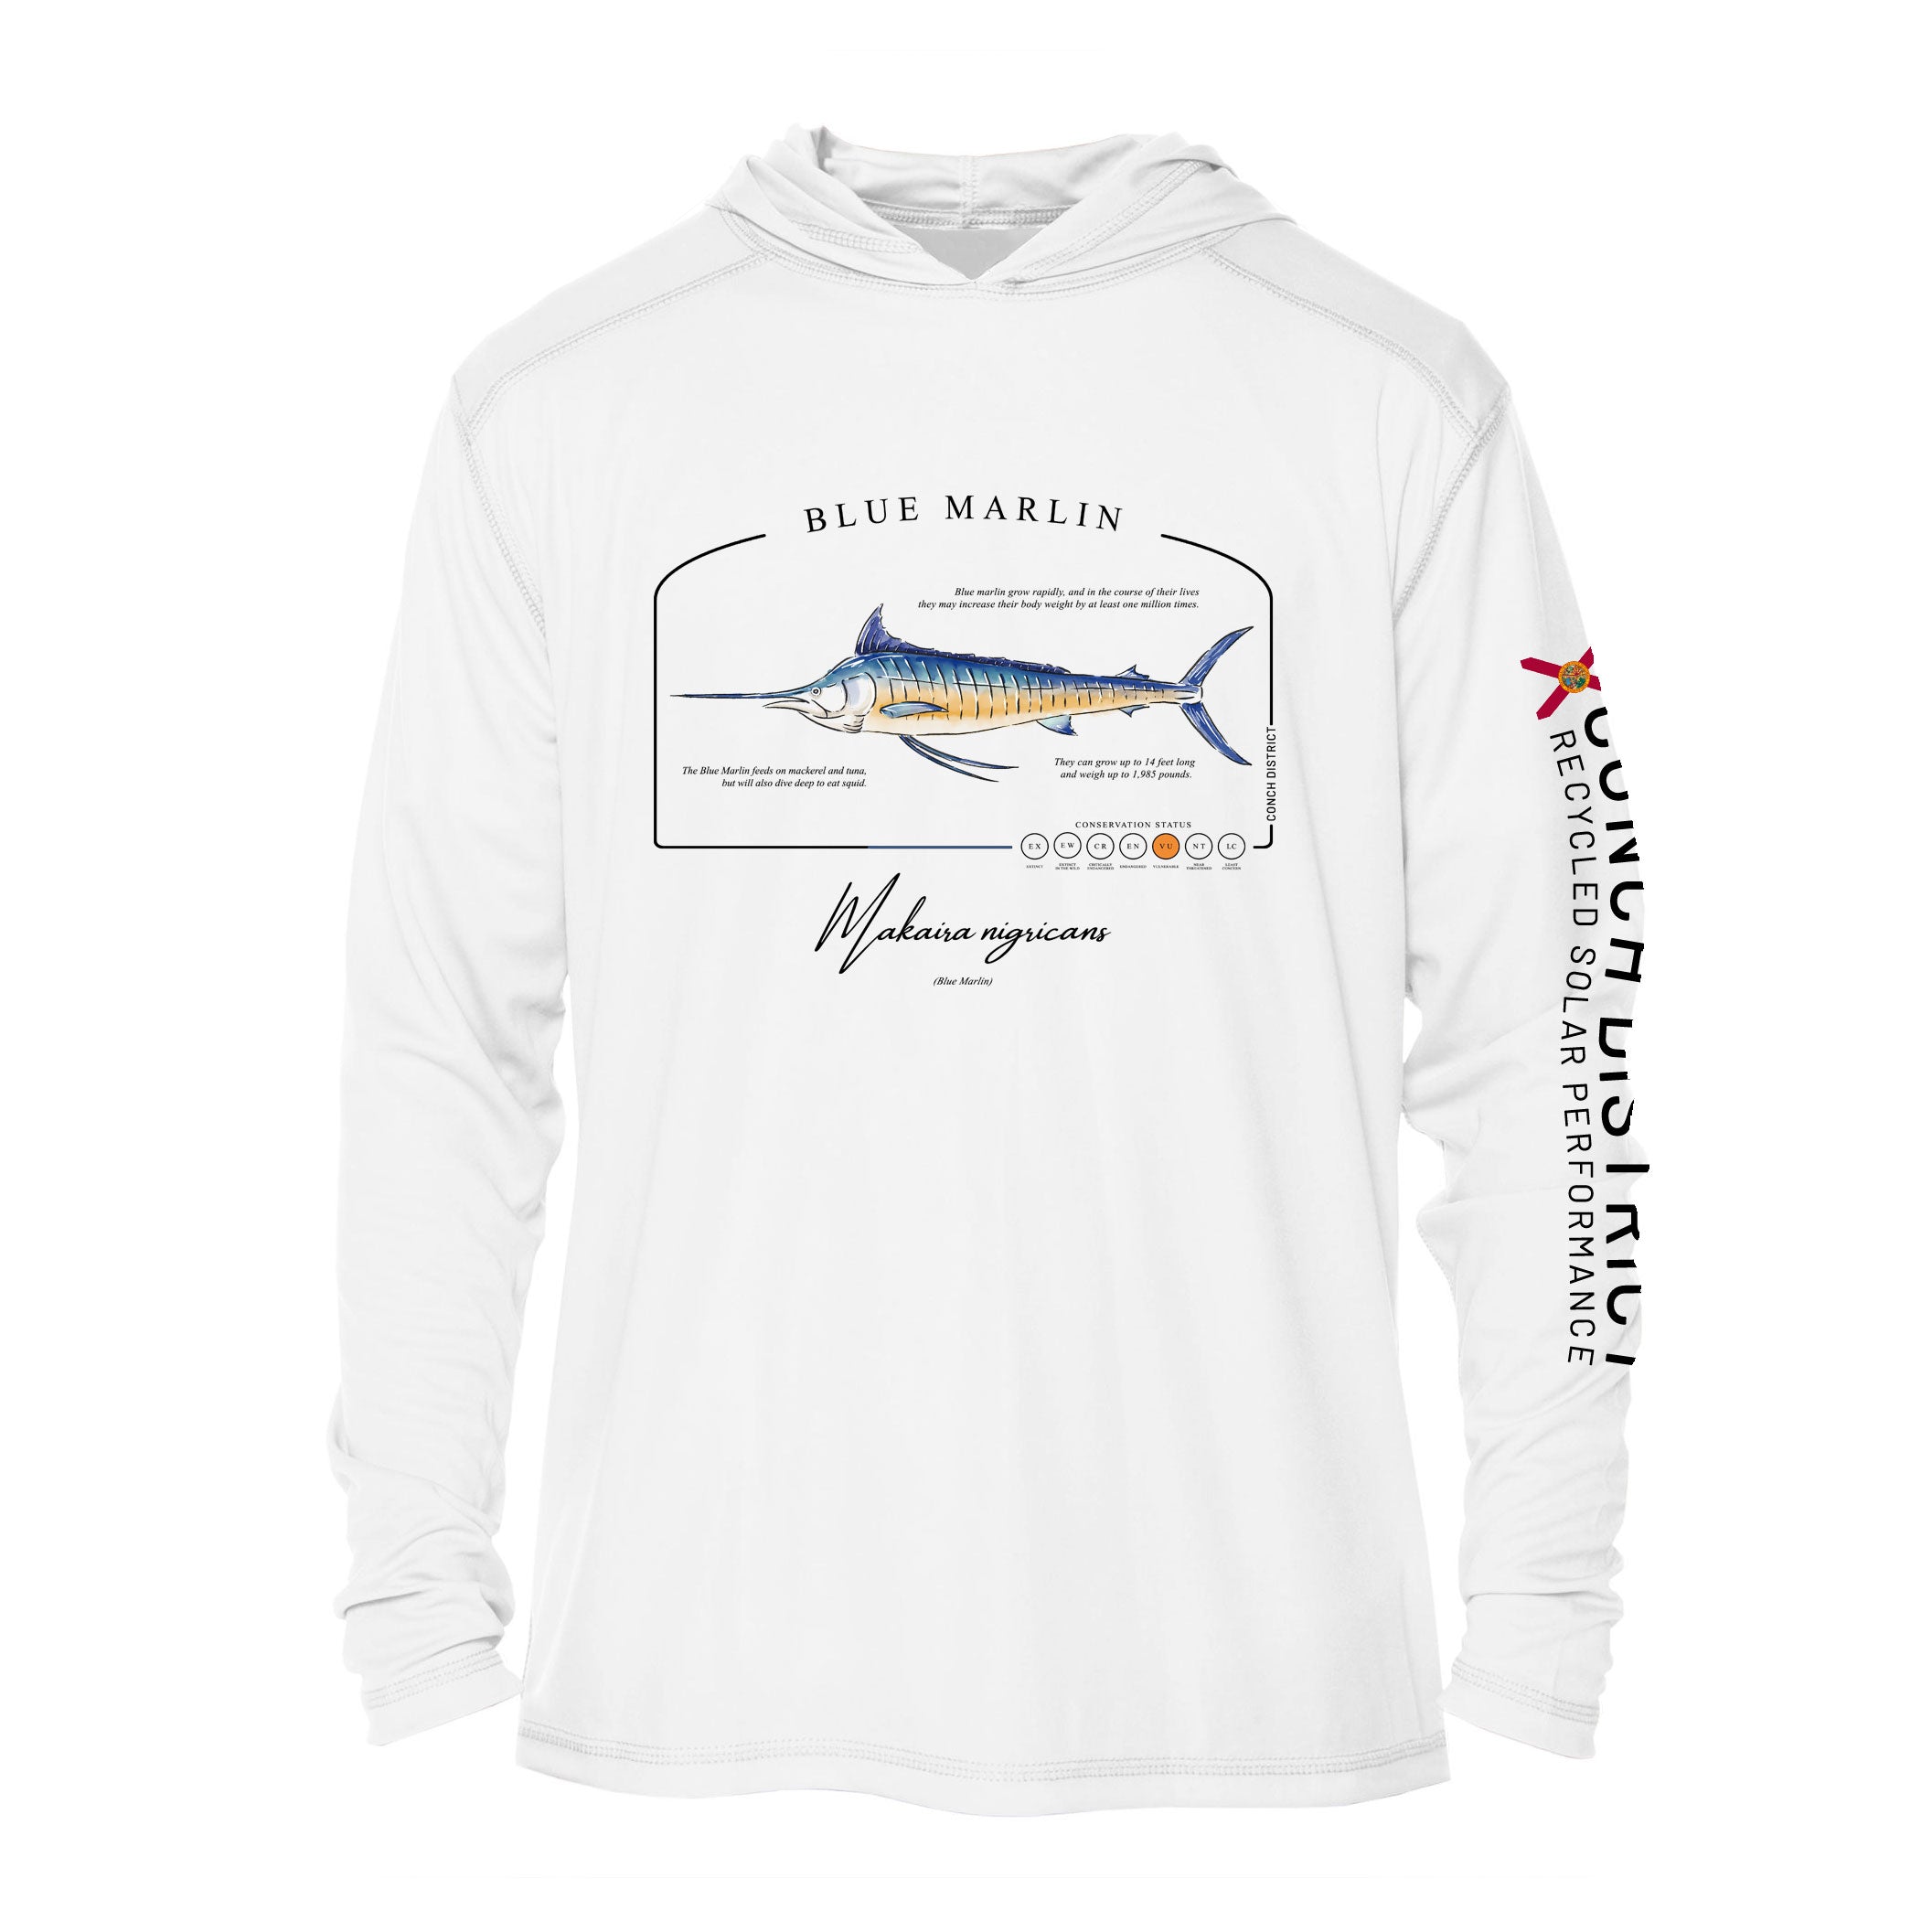 LARGE NEW GUY HARVEY Mens Sun Performance Long Sleeve Shirt Fishing Marlin  50